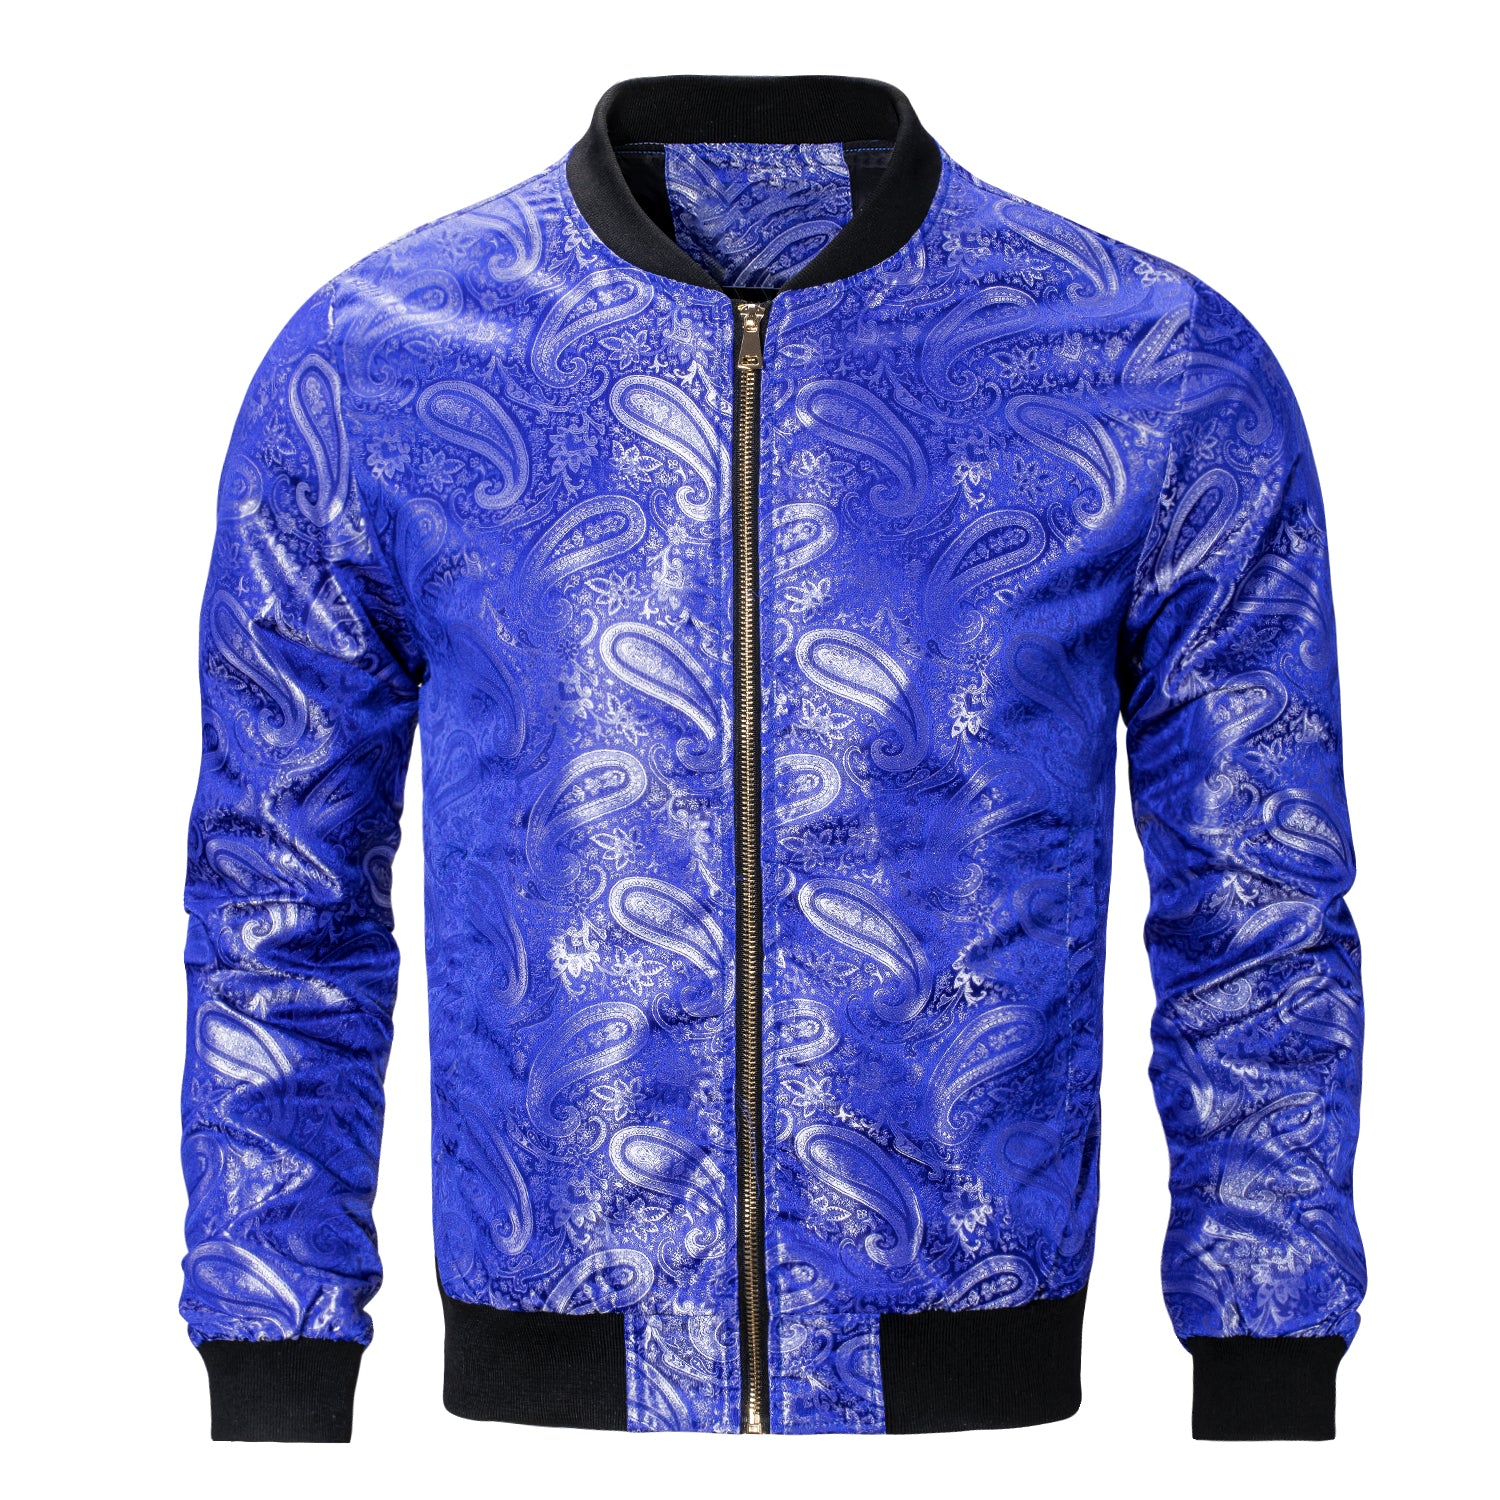 New Blue White Paisley Men's Urban Lightweight Zip Jacket Casual